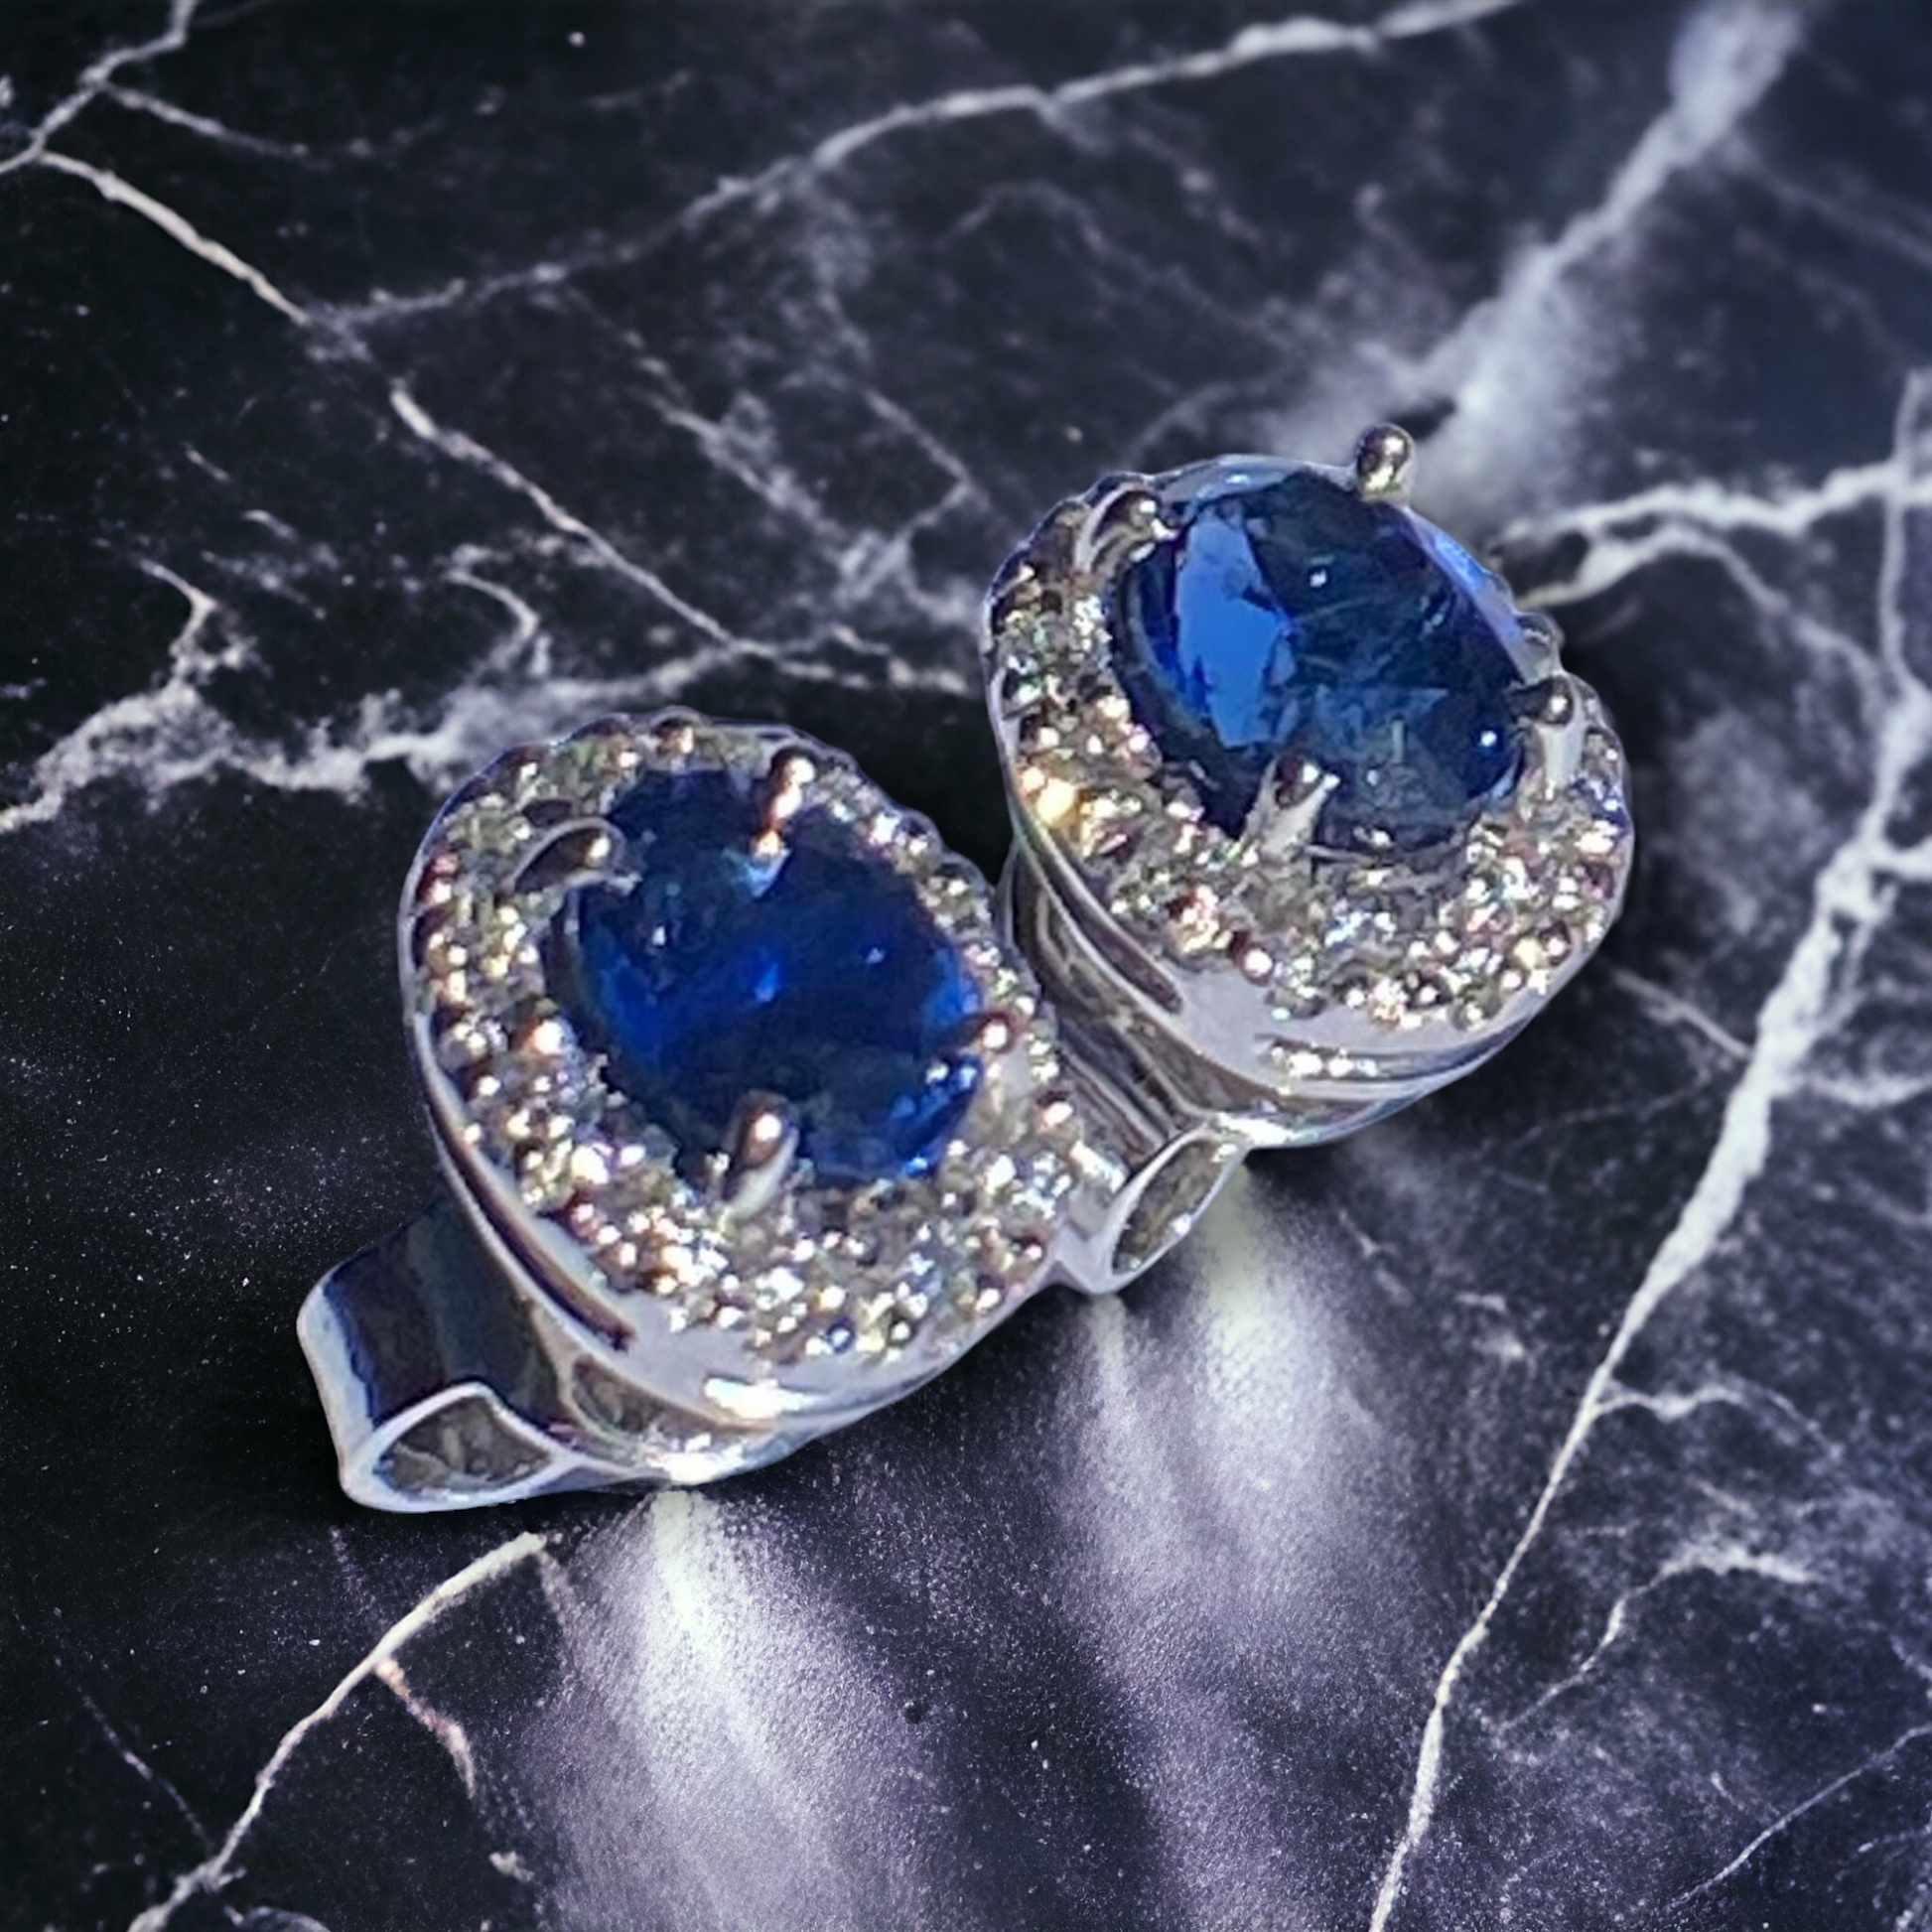 Handmade 18K white gold earrings 1.69 ct. natural Royal blue Sapphires, unheated & natural Vvs1 quality Diamonds.